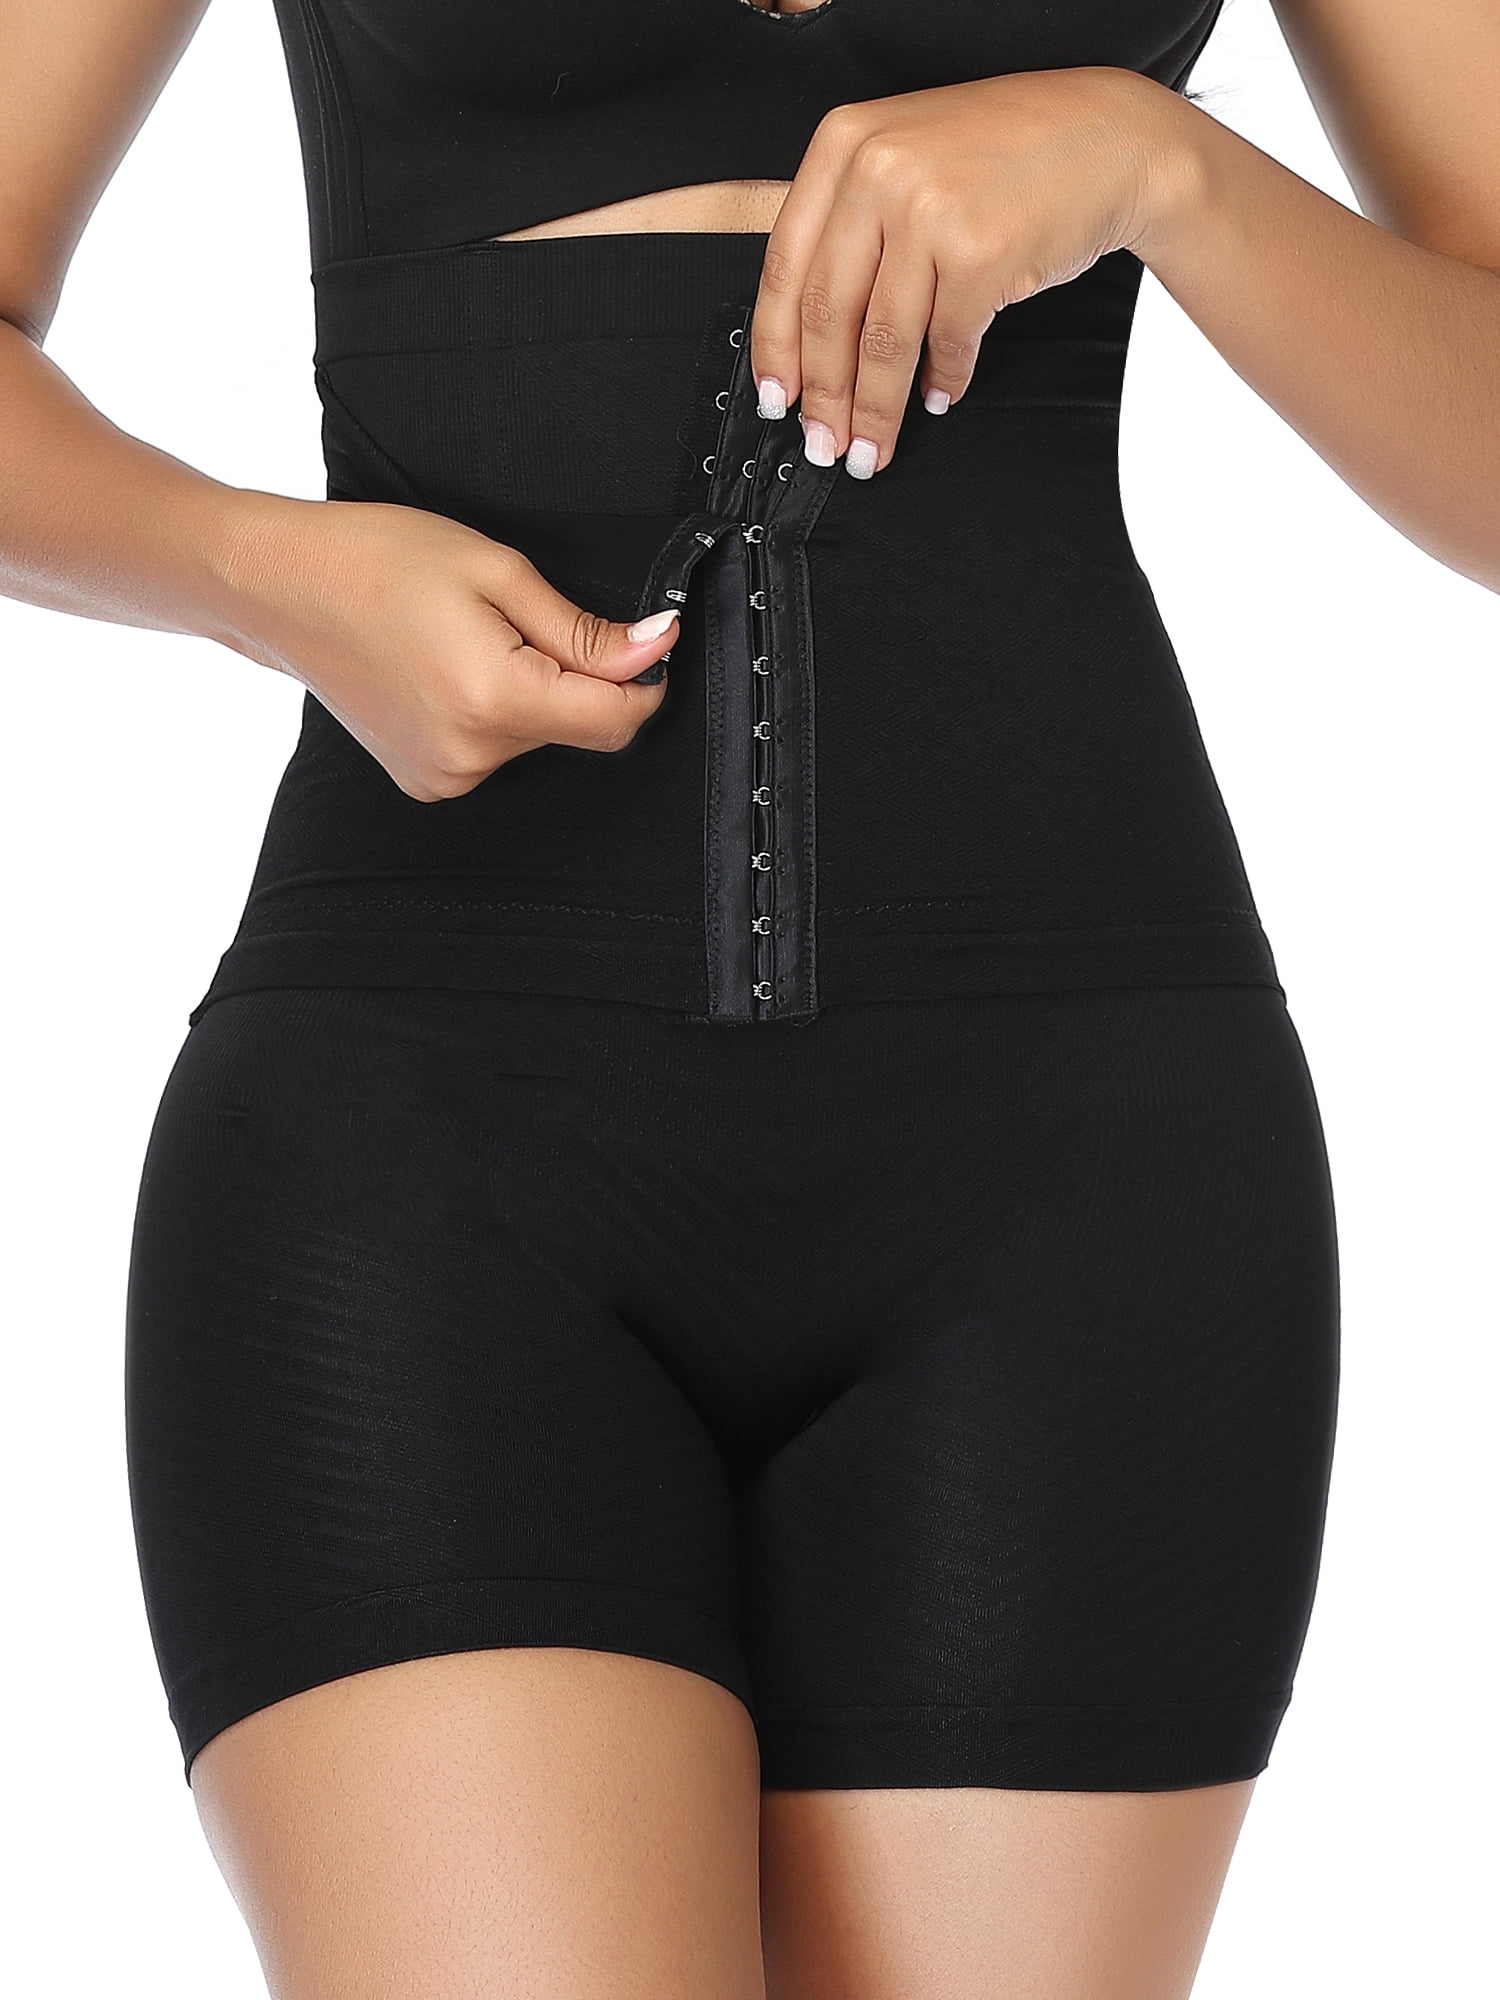 Qric Qric Tummy Control Shapewear Panties For Women High Waist Trainer Cincher Underwear Firm 